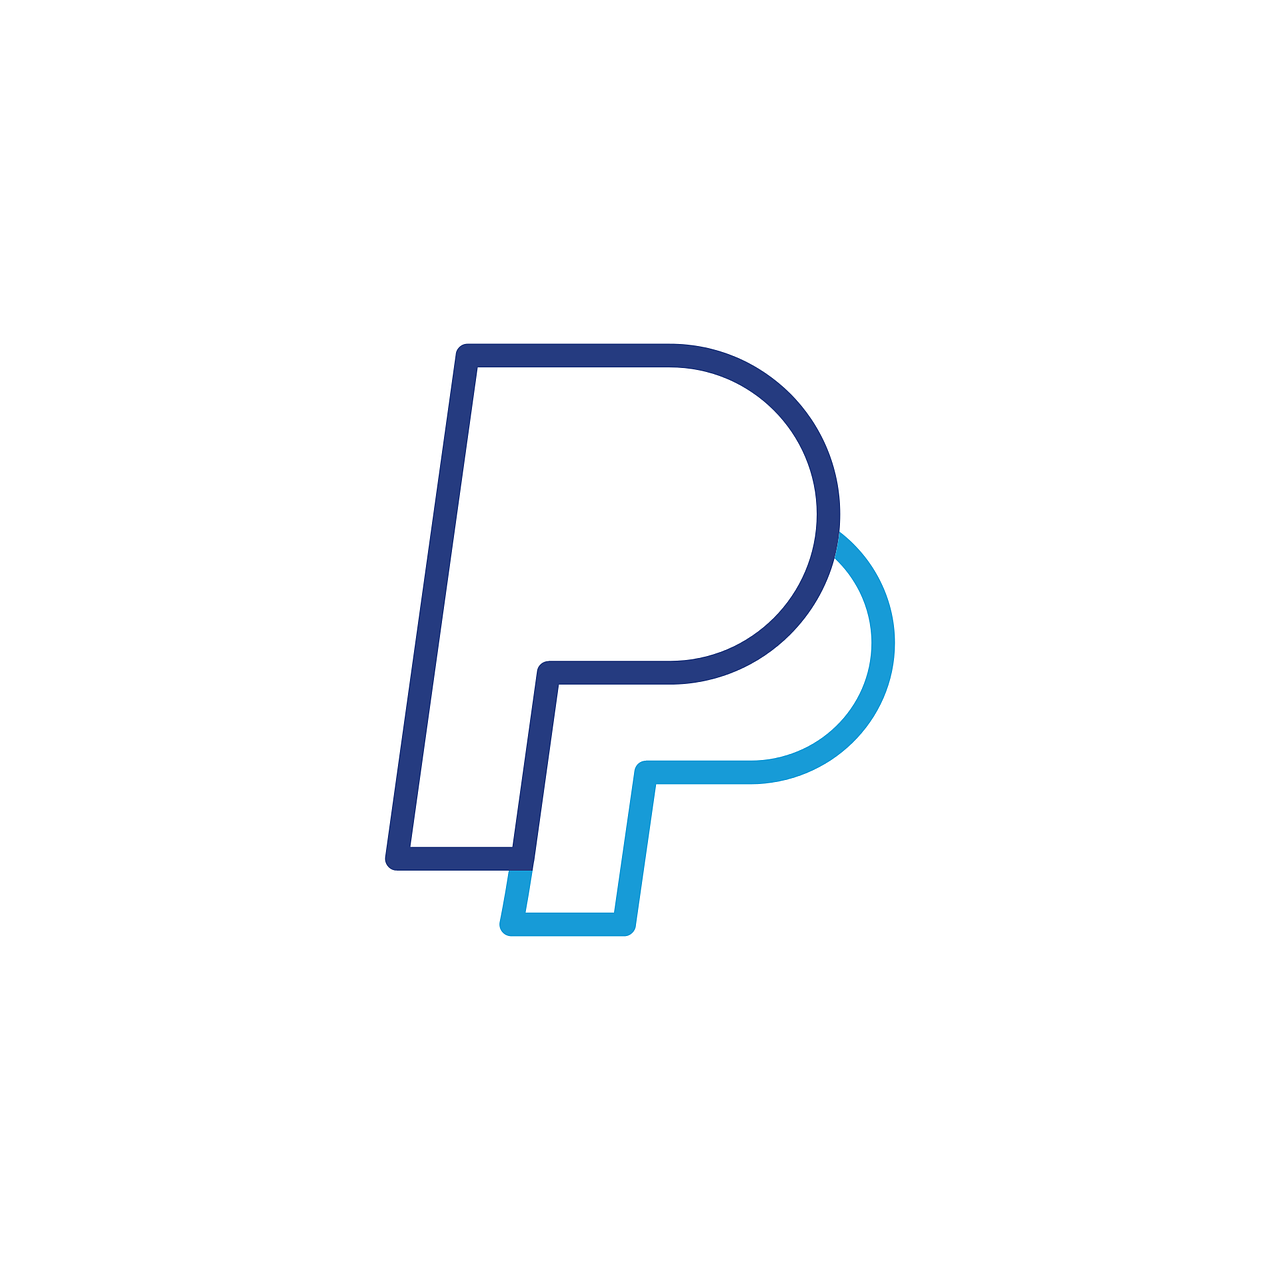 Paypal,  Paypal Piktograma,  Paypal Logotipas,  Paypal Simbolis,  Socialiniai Tinklai,  Tinklai,  Internetas,  Tinklas,  Socialinė,  Socialinis Tinklas